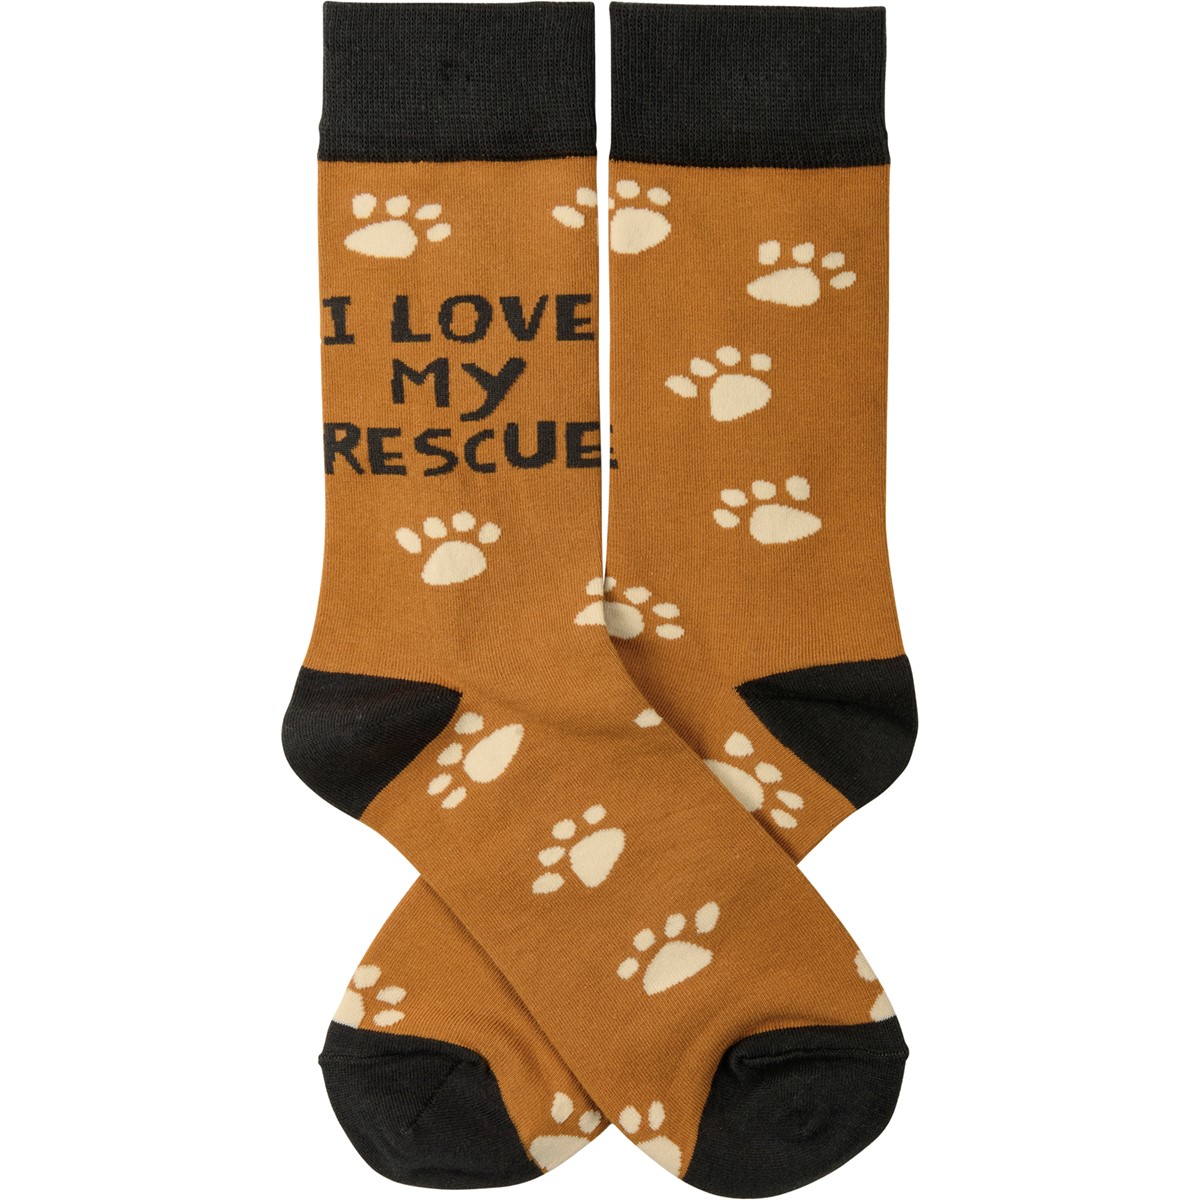 I Love My Rescue Socks - Cotton, Nylon, Spandex